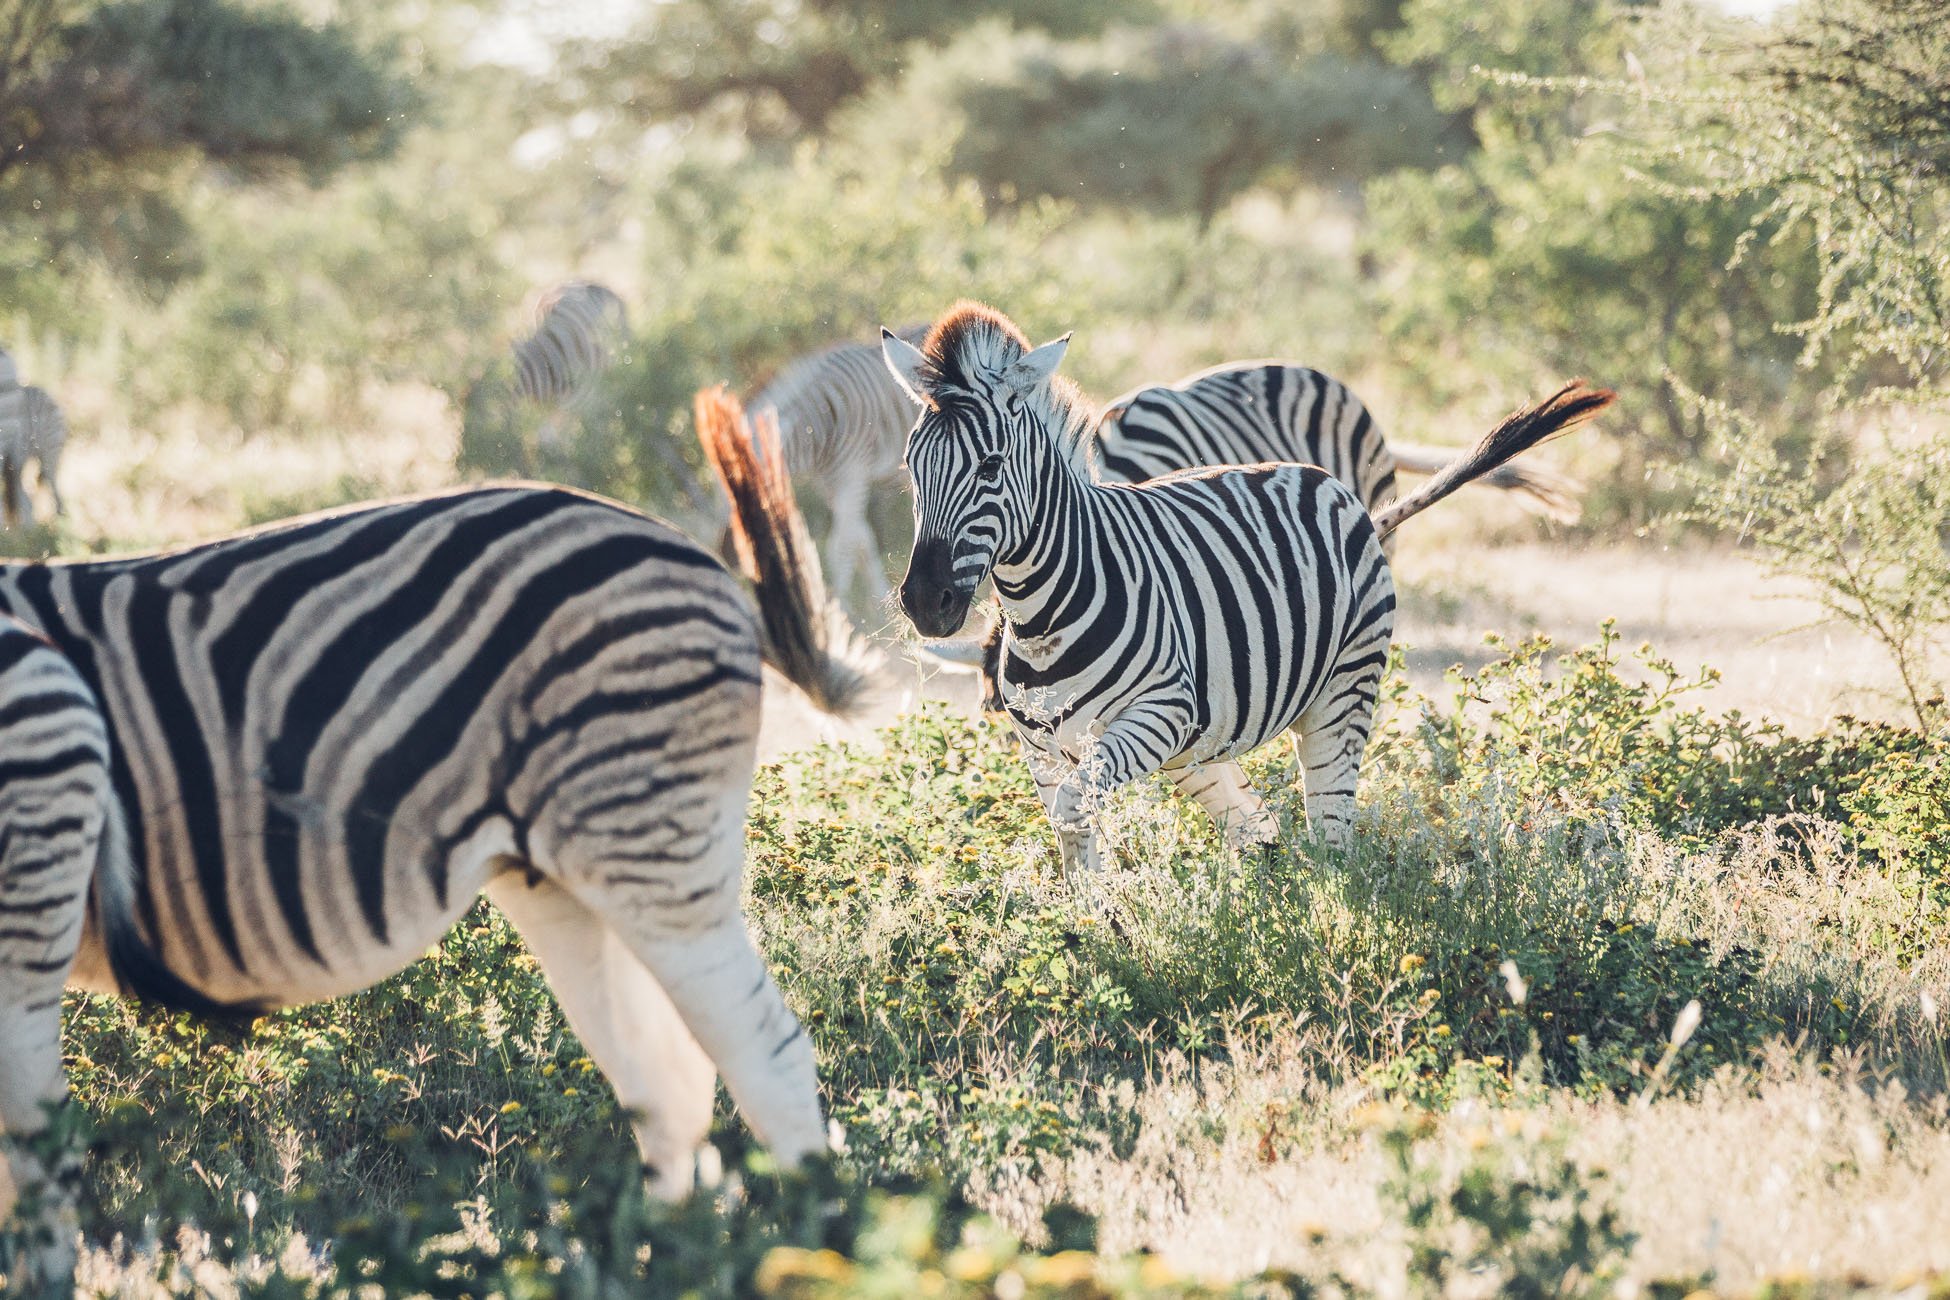 Baby Zebras playing at Etosha National Park